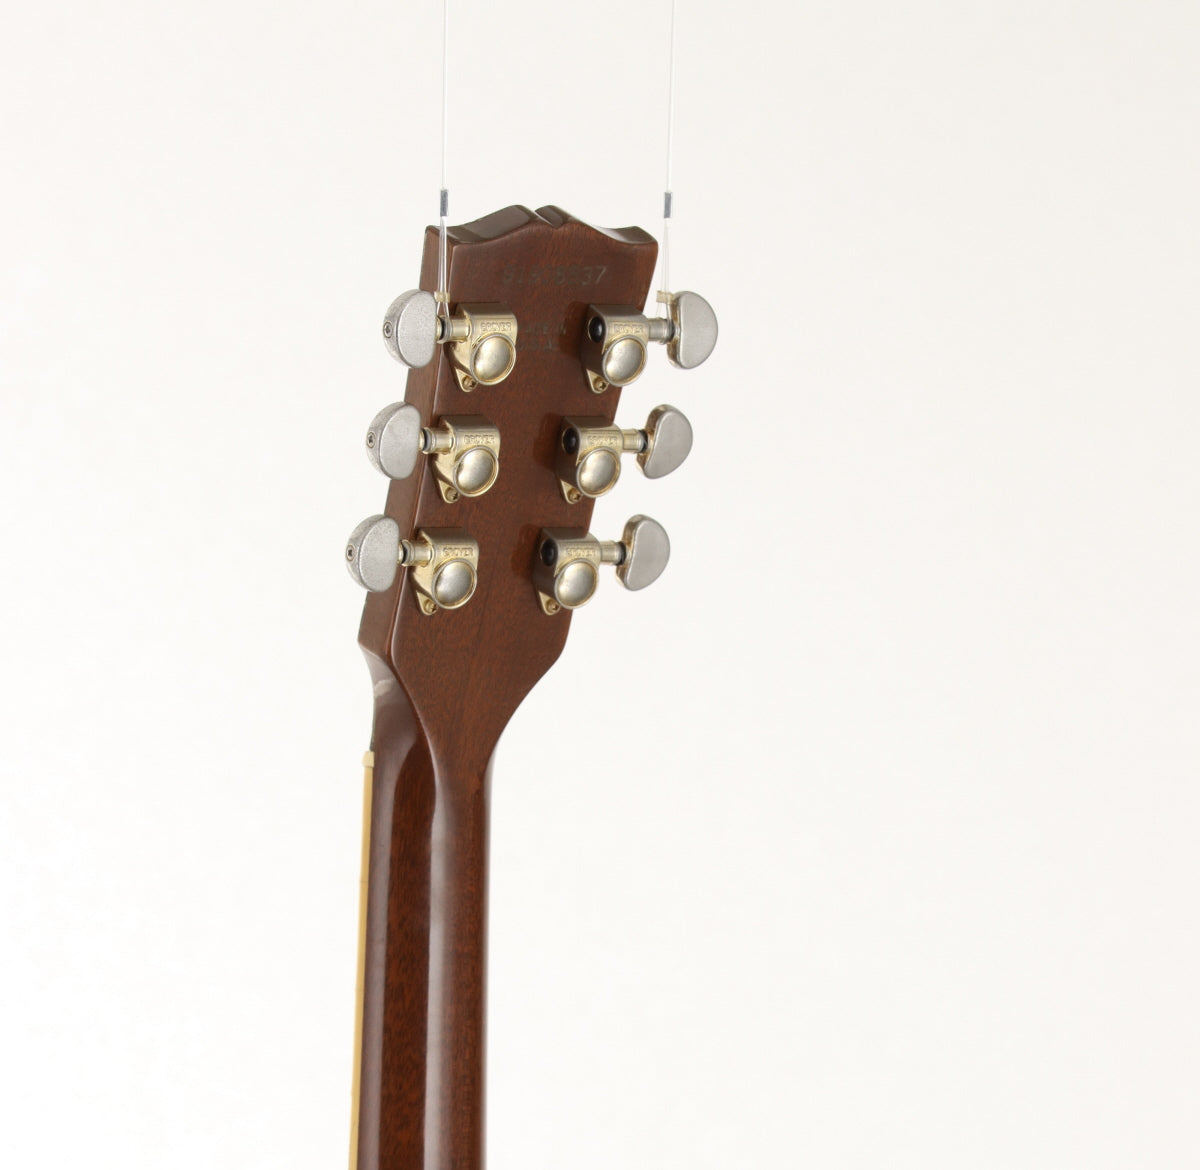 [SN 91908537] USED Gibson USA / Les Paul Standard 98 Gold Hardware Honey Burst 1998 [08]